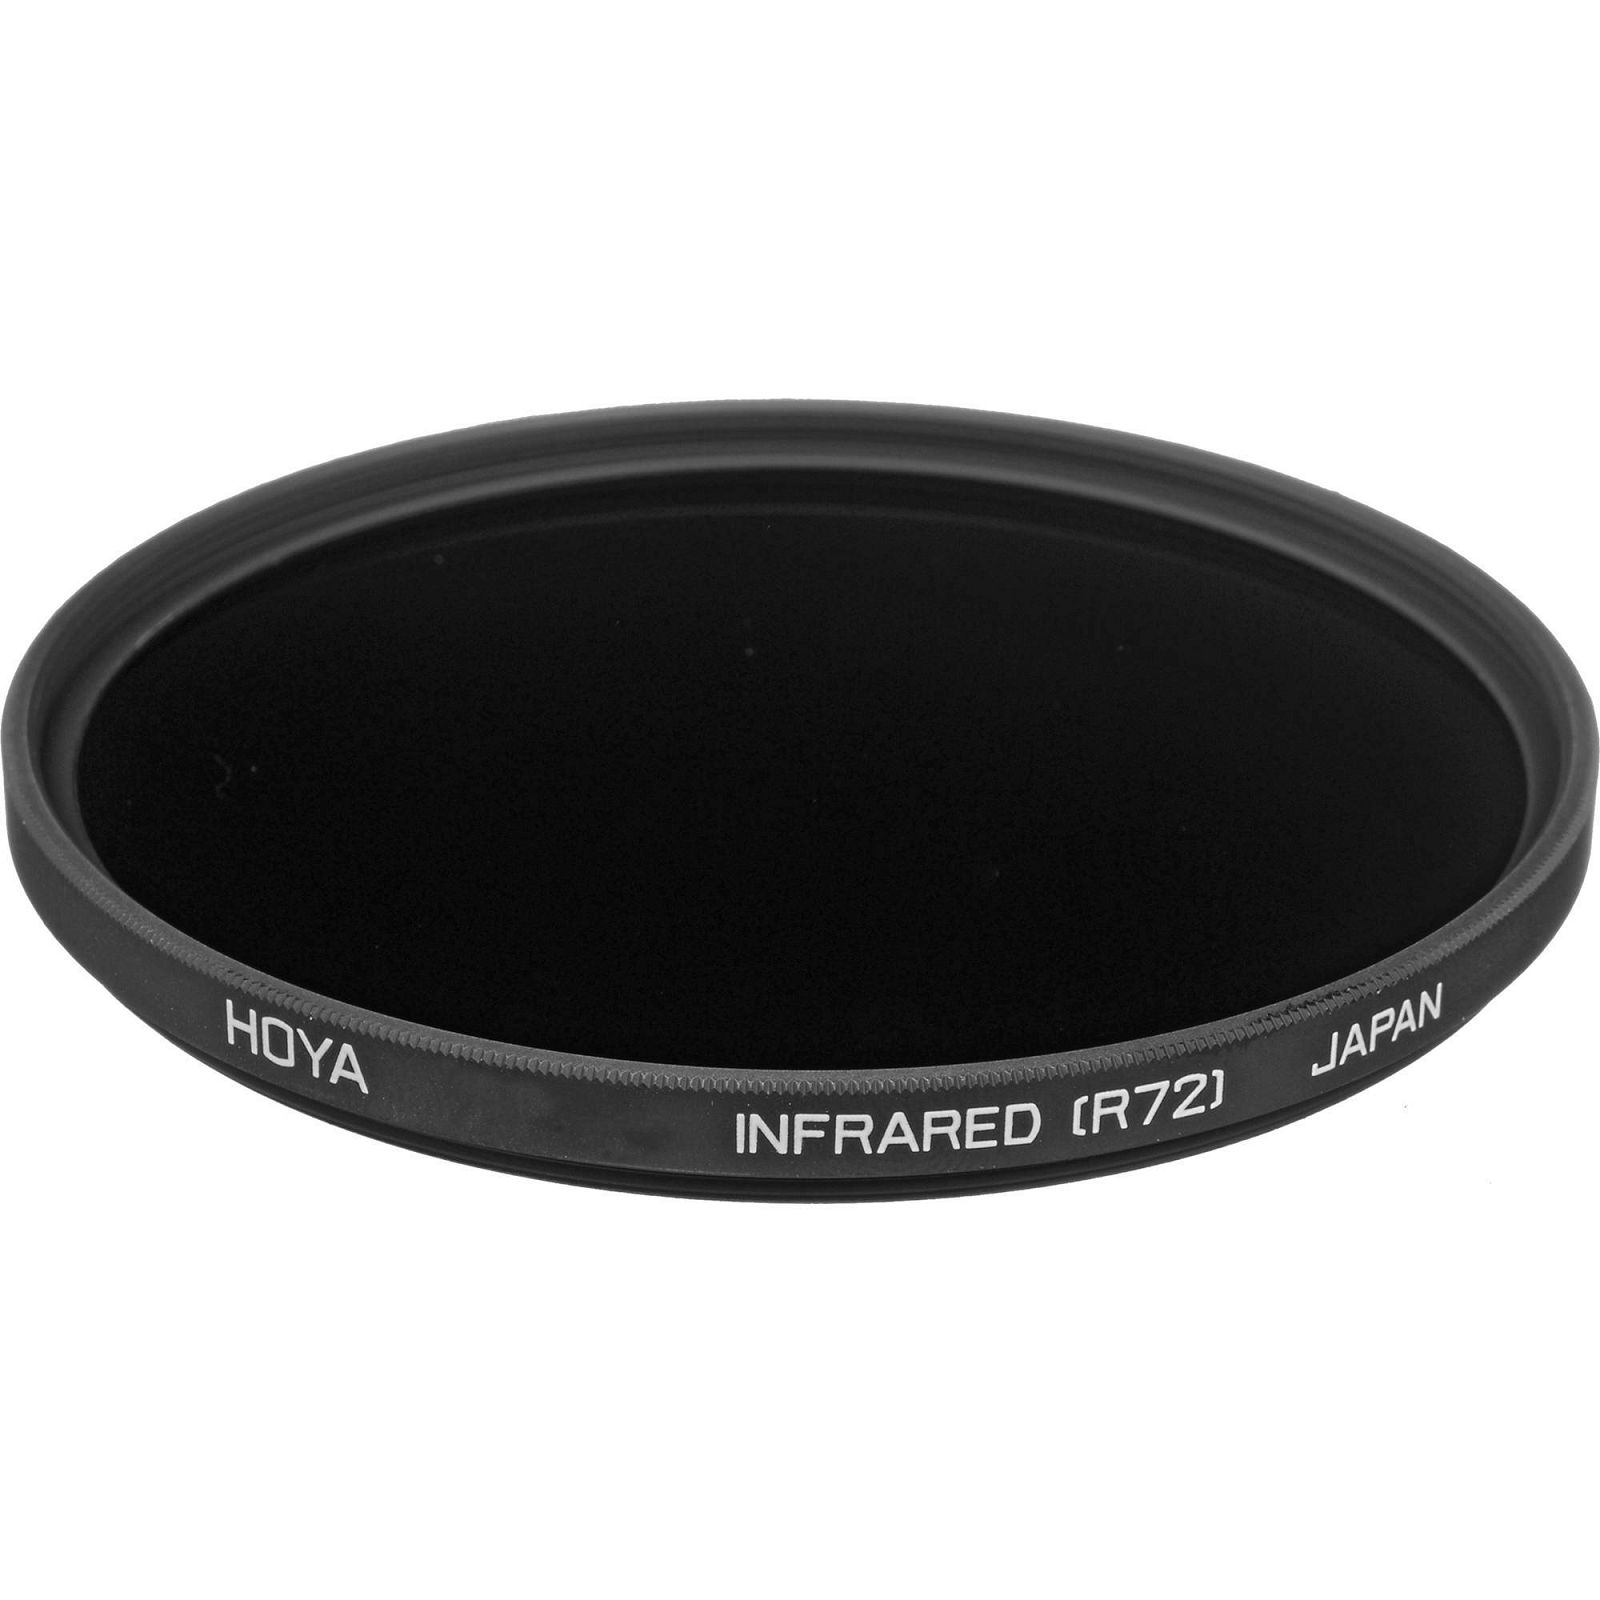 Hoya Infrared R72 filter 49mm